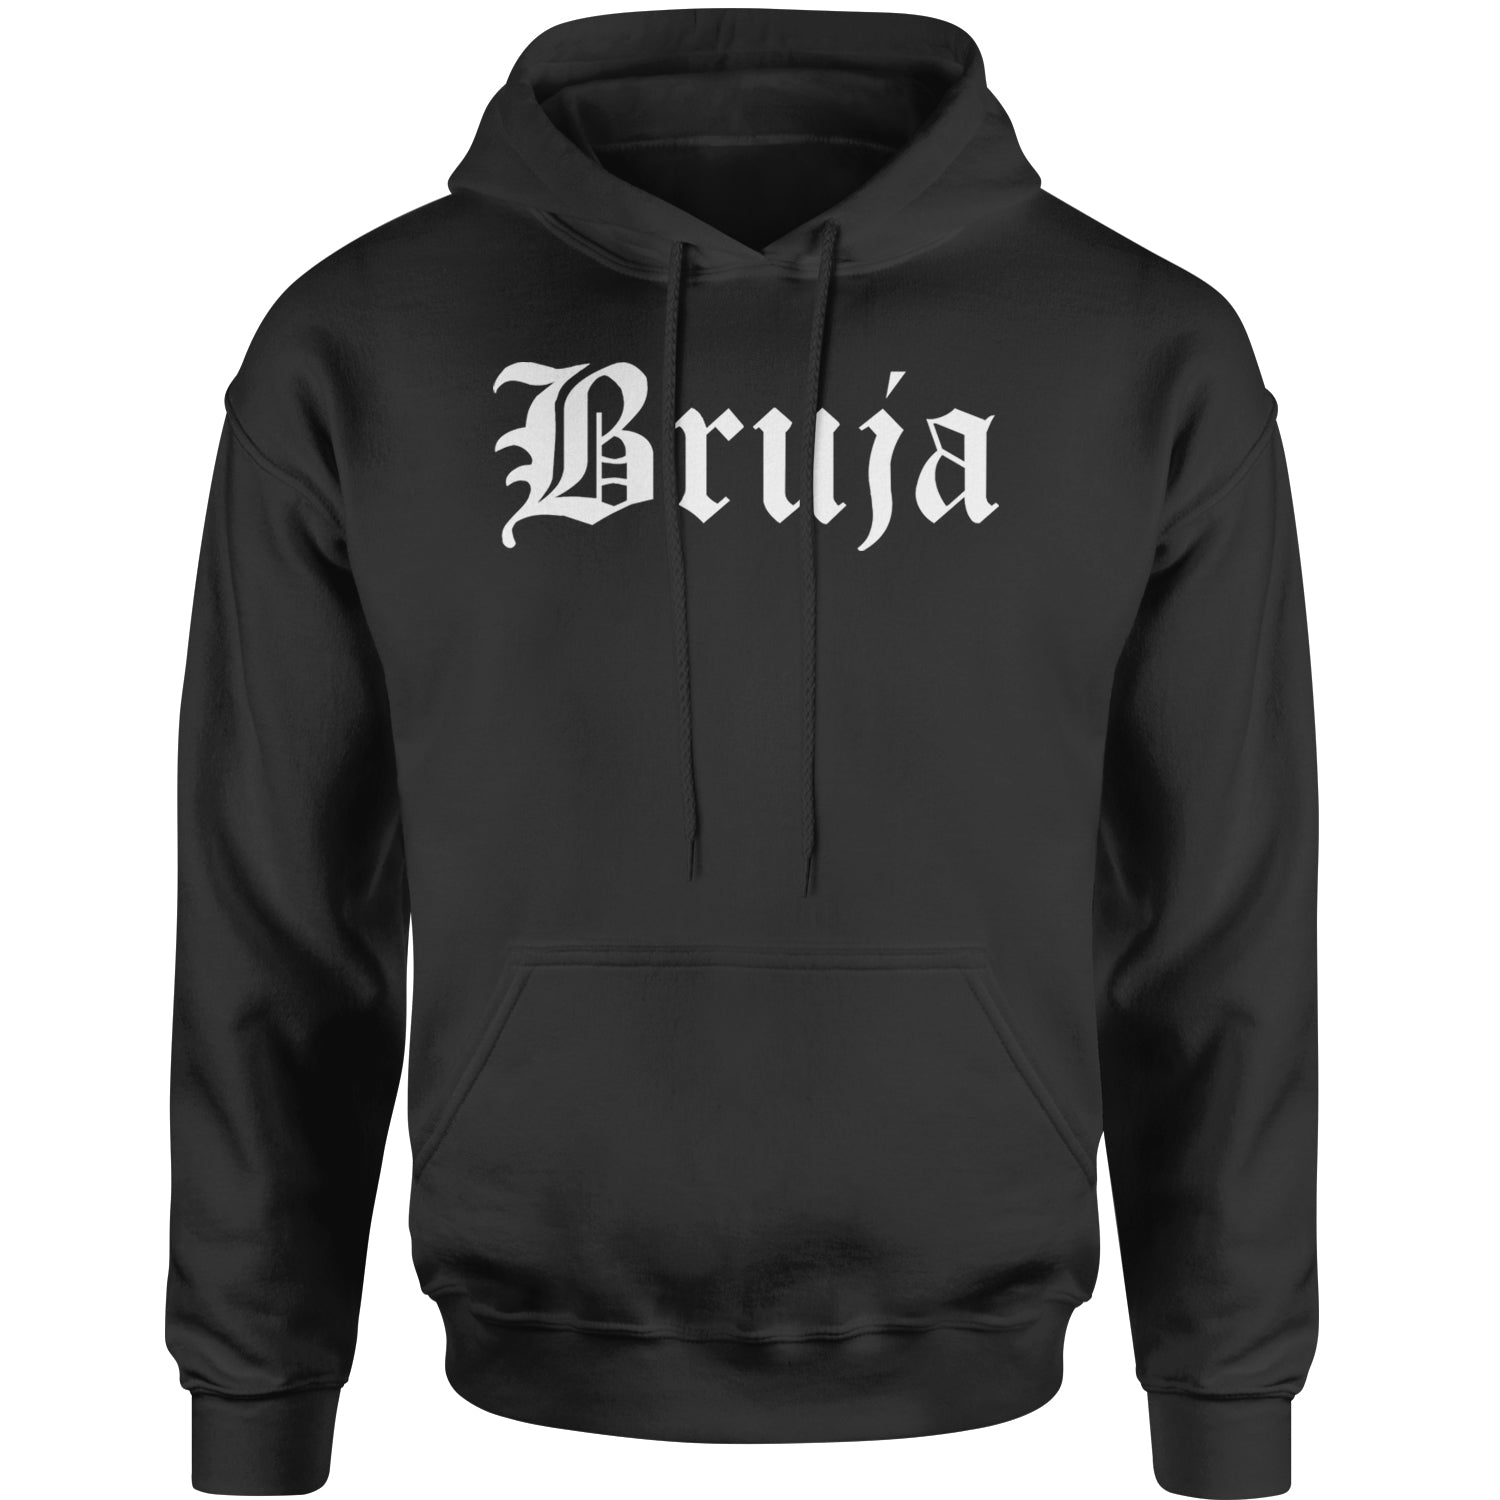 Bruja Gothic Spanish Witch Adult Hoodie Sweatshirt